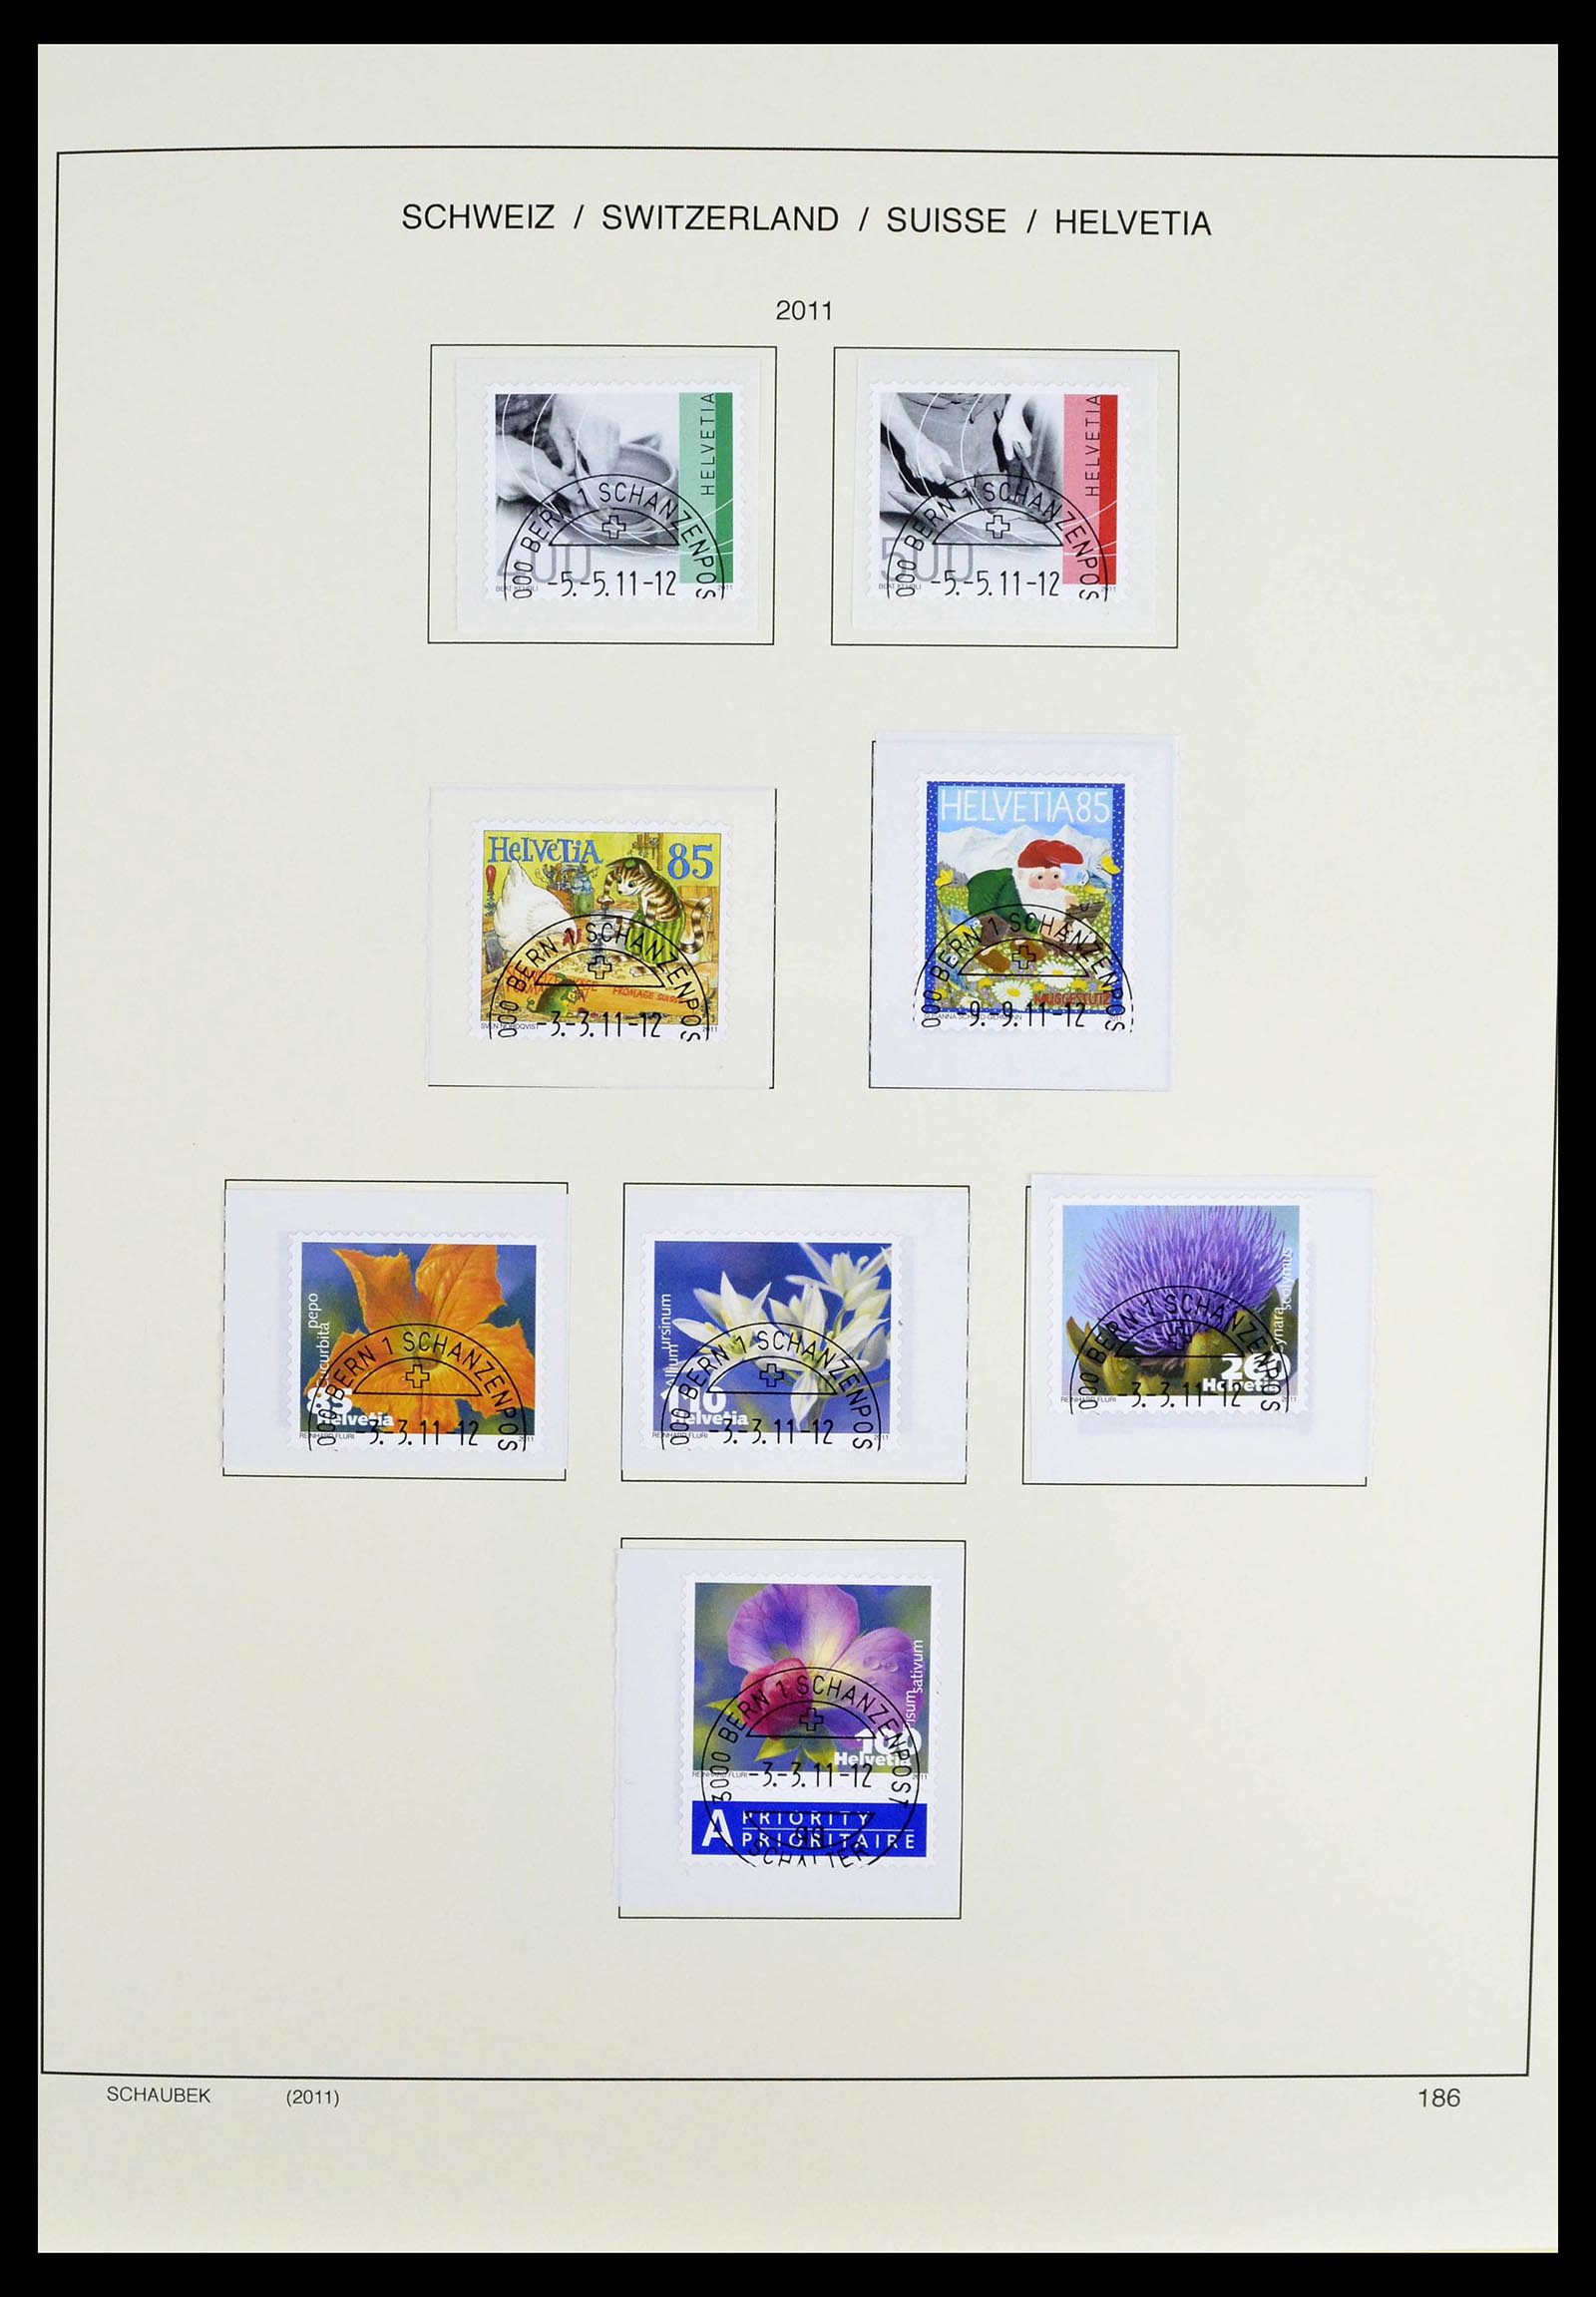 39322 0126 - Stamp collection 39322 Switzerland 1980-2011.